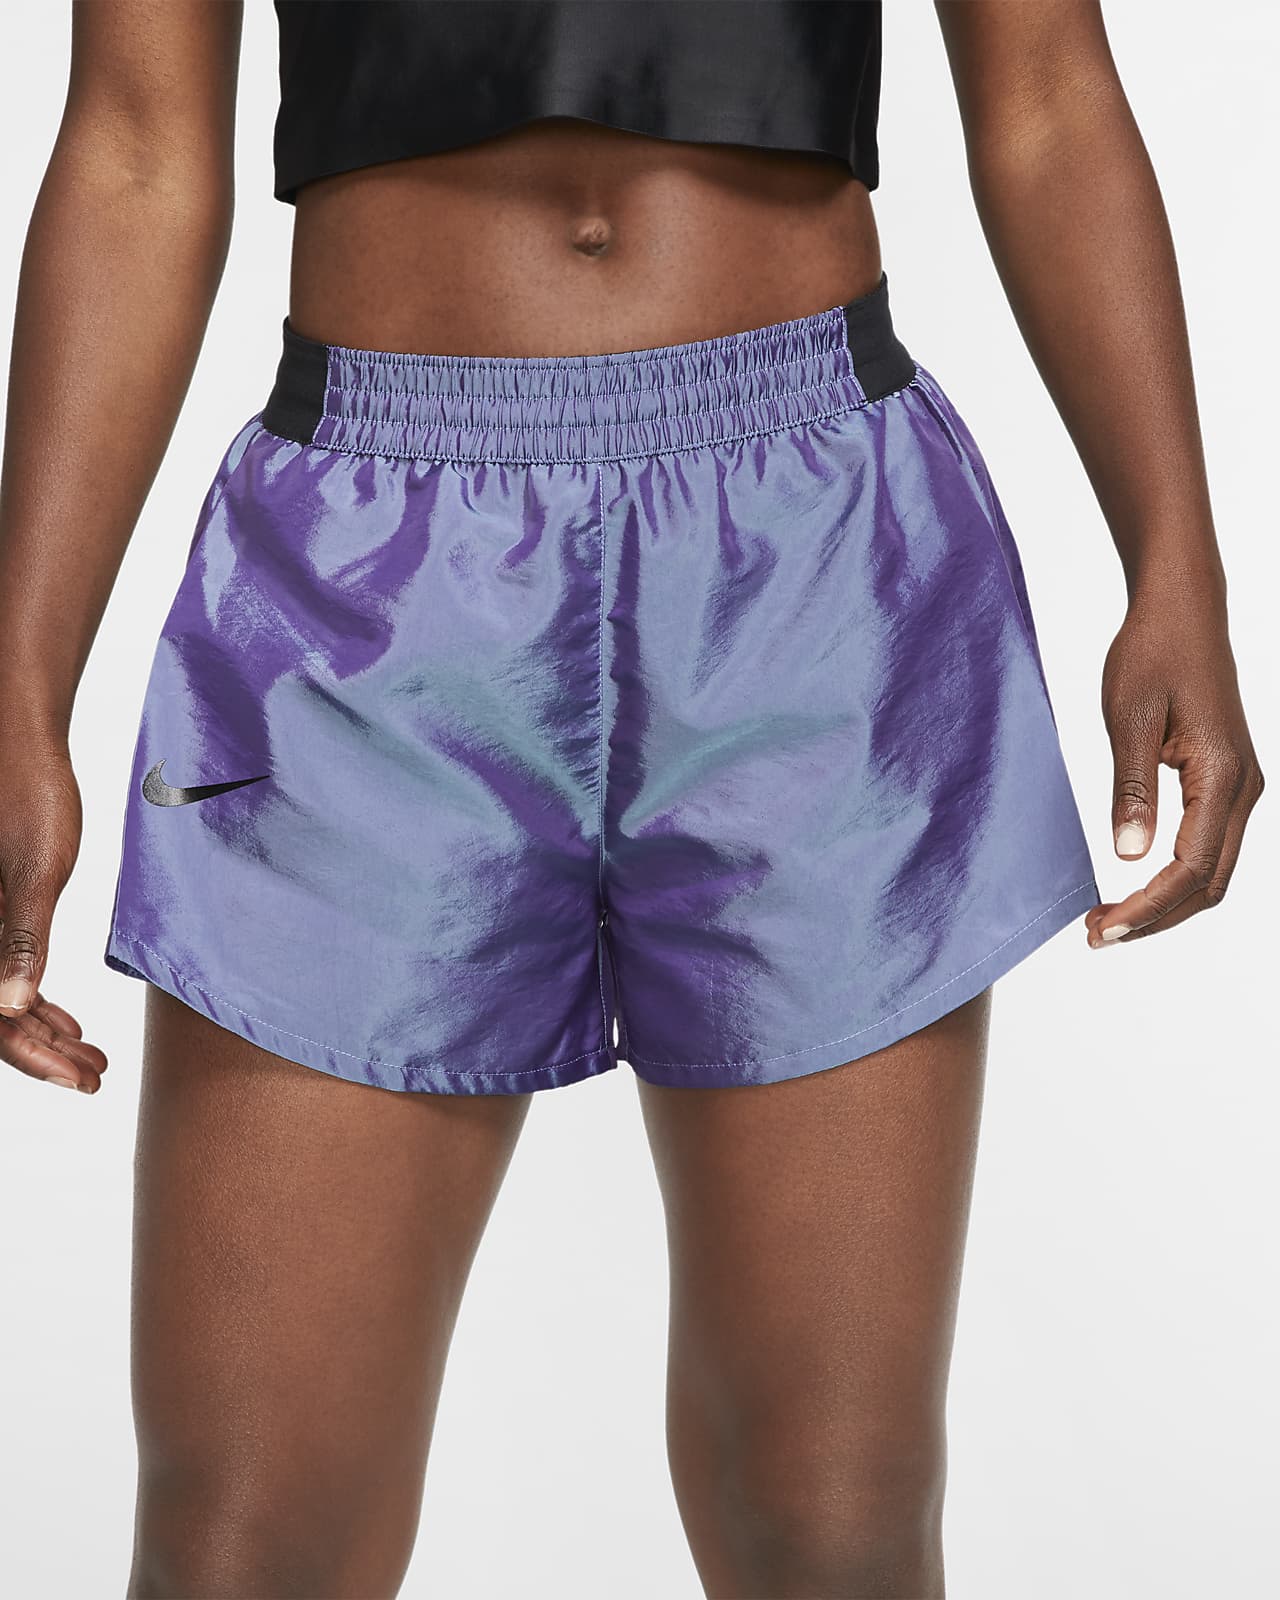 Nike Tempo Luxe Women's Running Shorts 